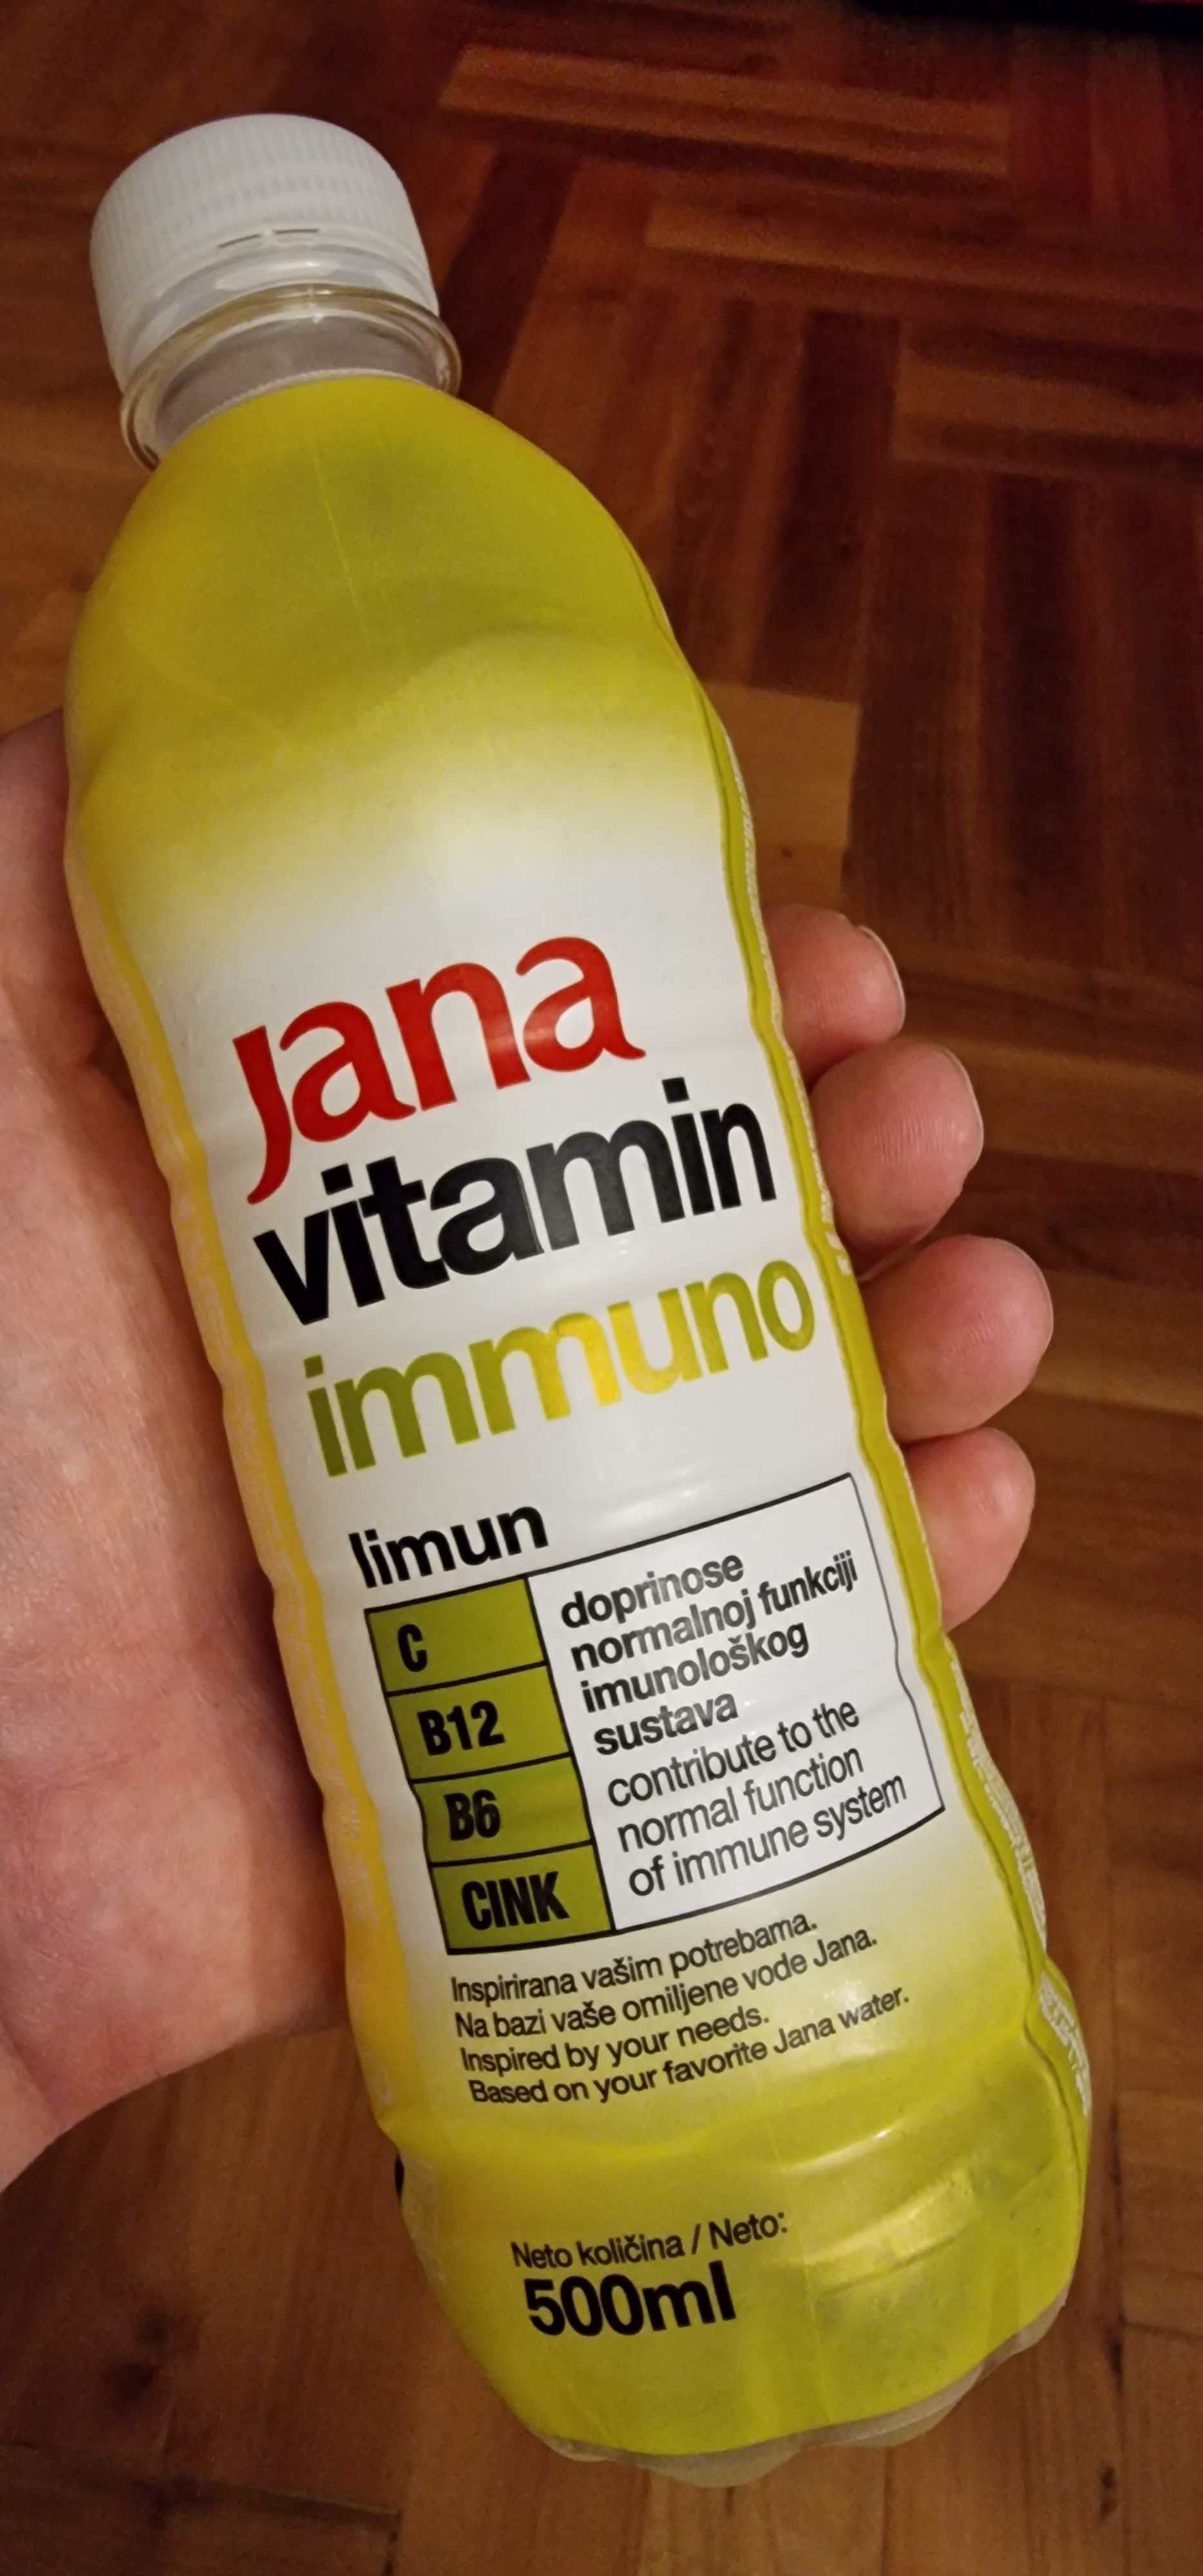 Jana vitamin immuno limun